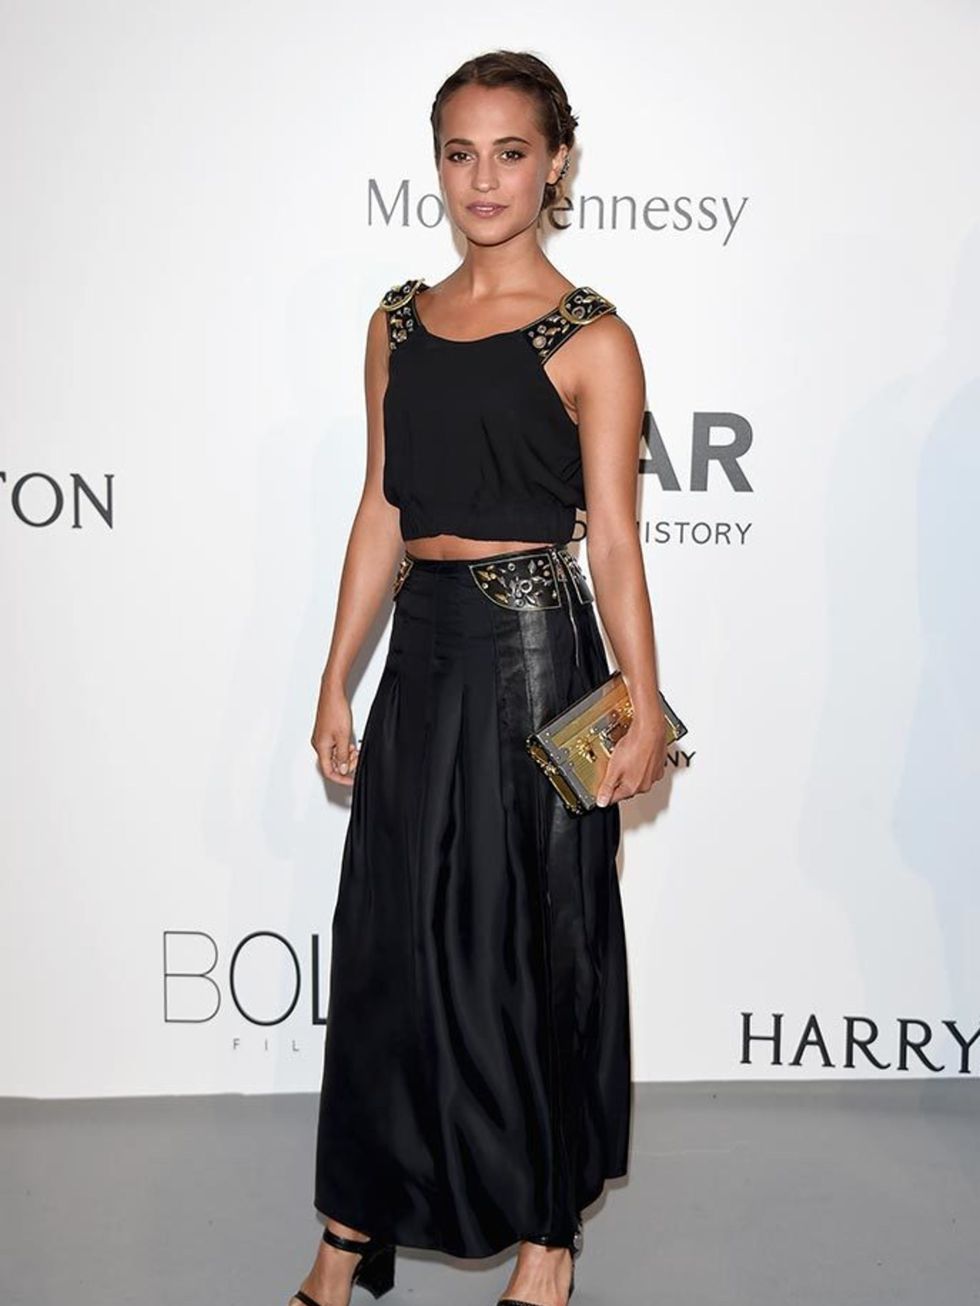 Alicia Vikander Amfar Gala in Cannes May 21, 2015 – Star Style